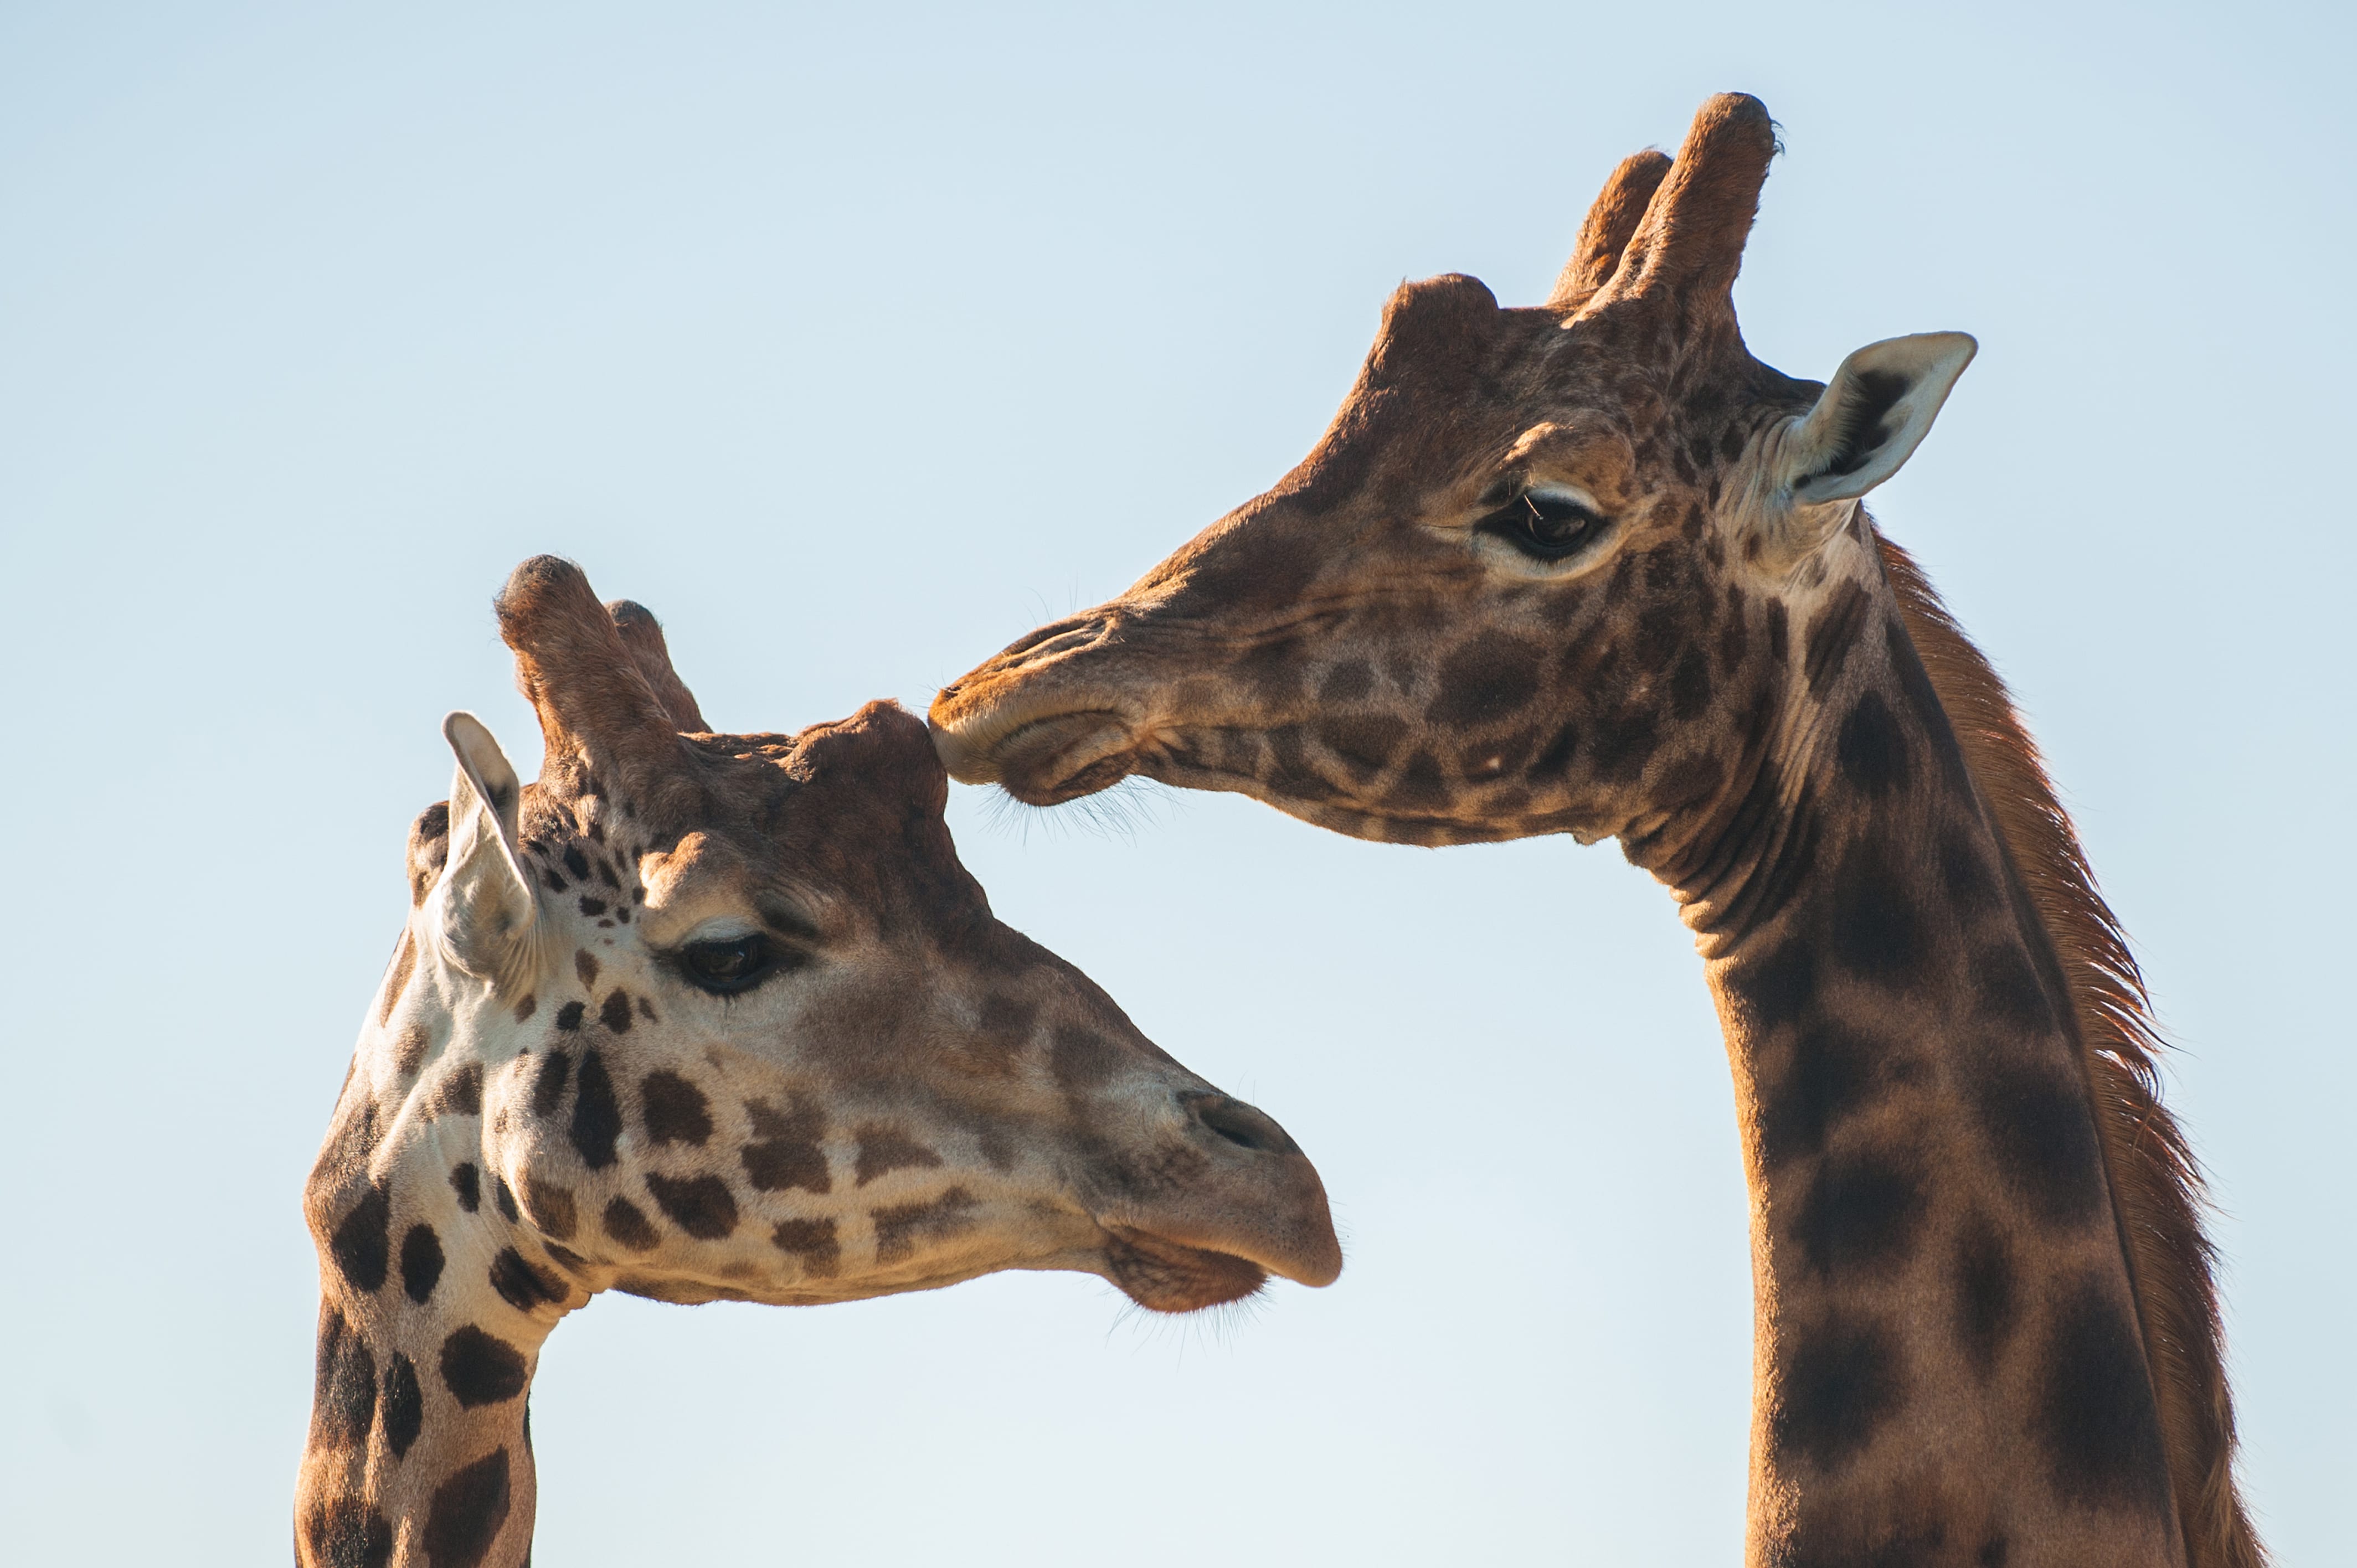 Giraffe webcam – watch the giraffes live on our web cam - Folly Farm